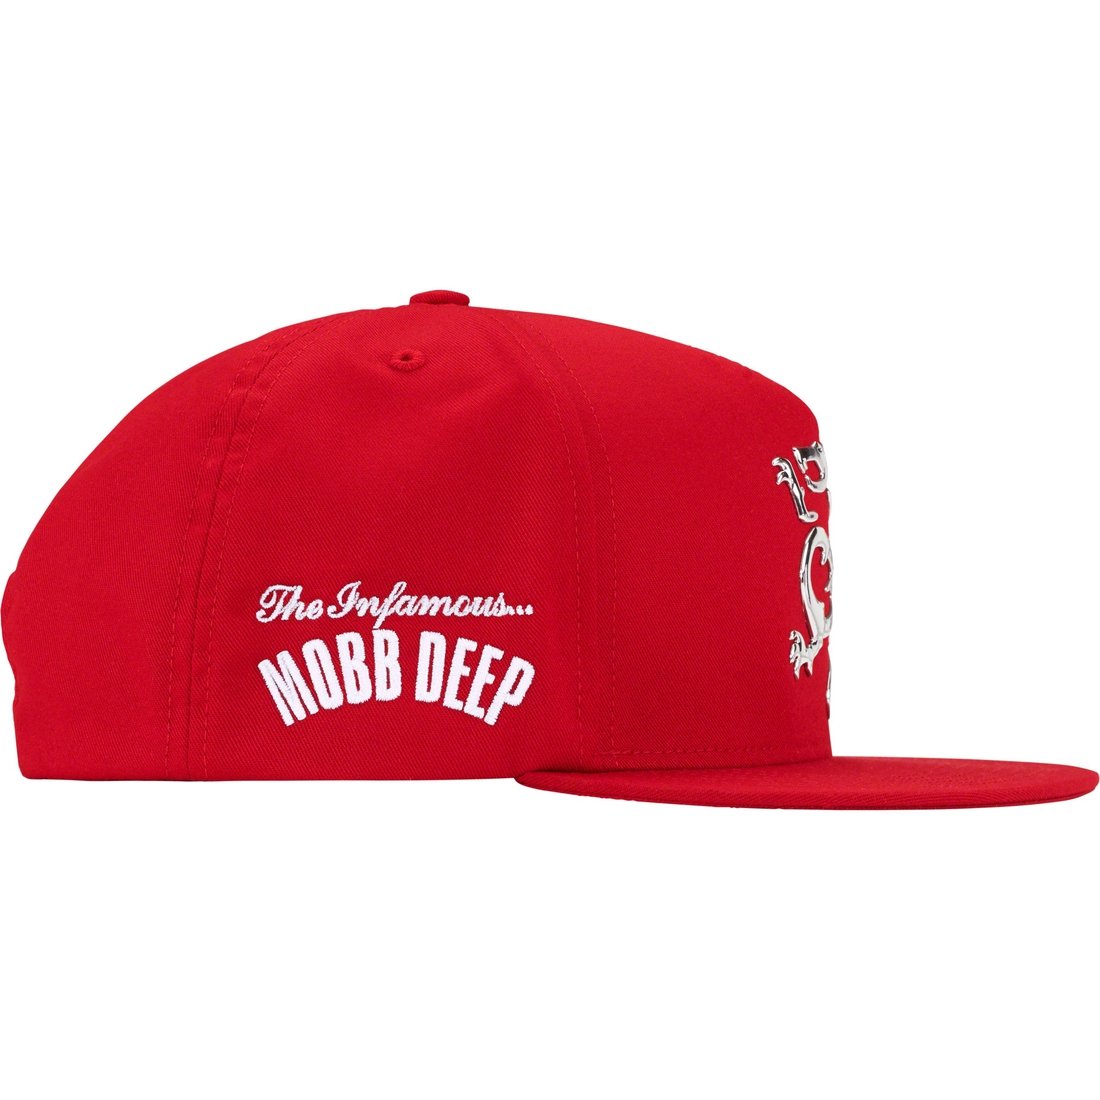 Supreme cap red - Gem